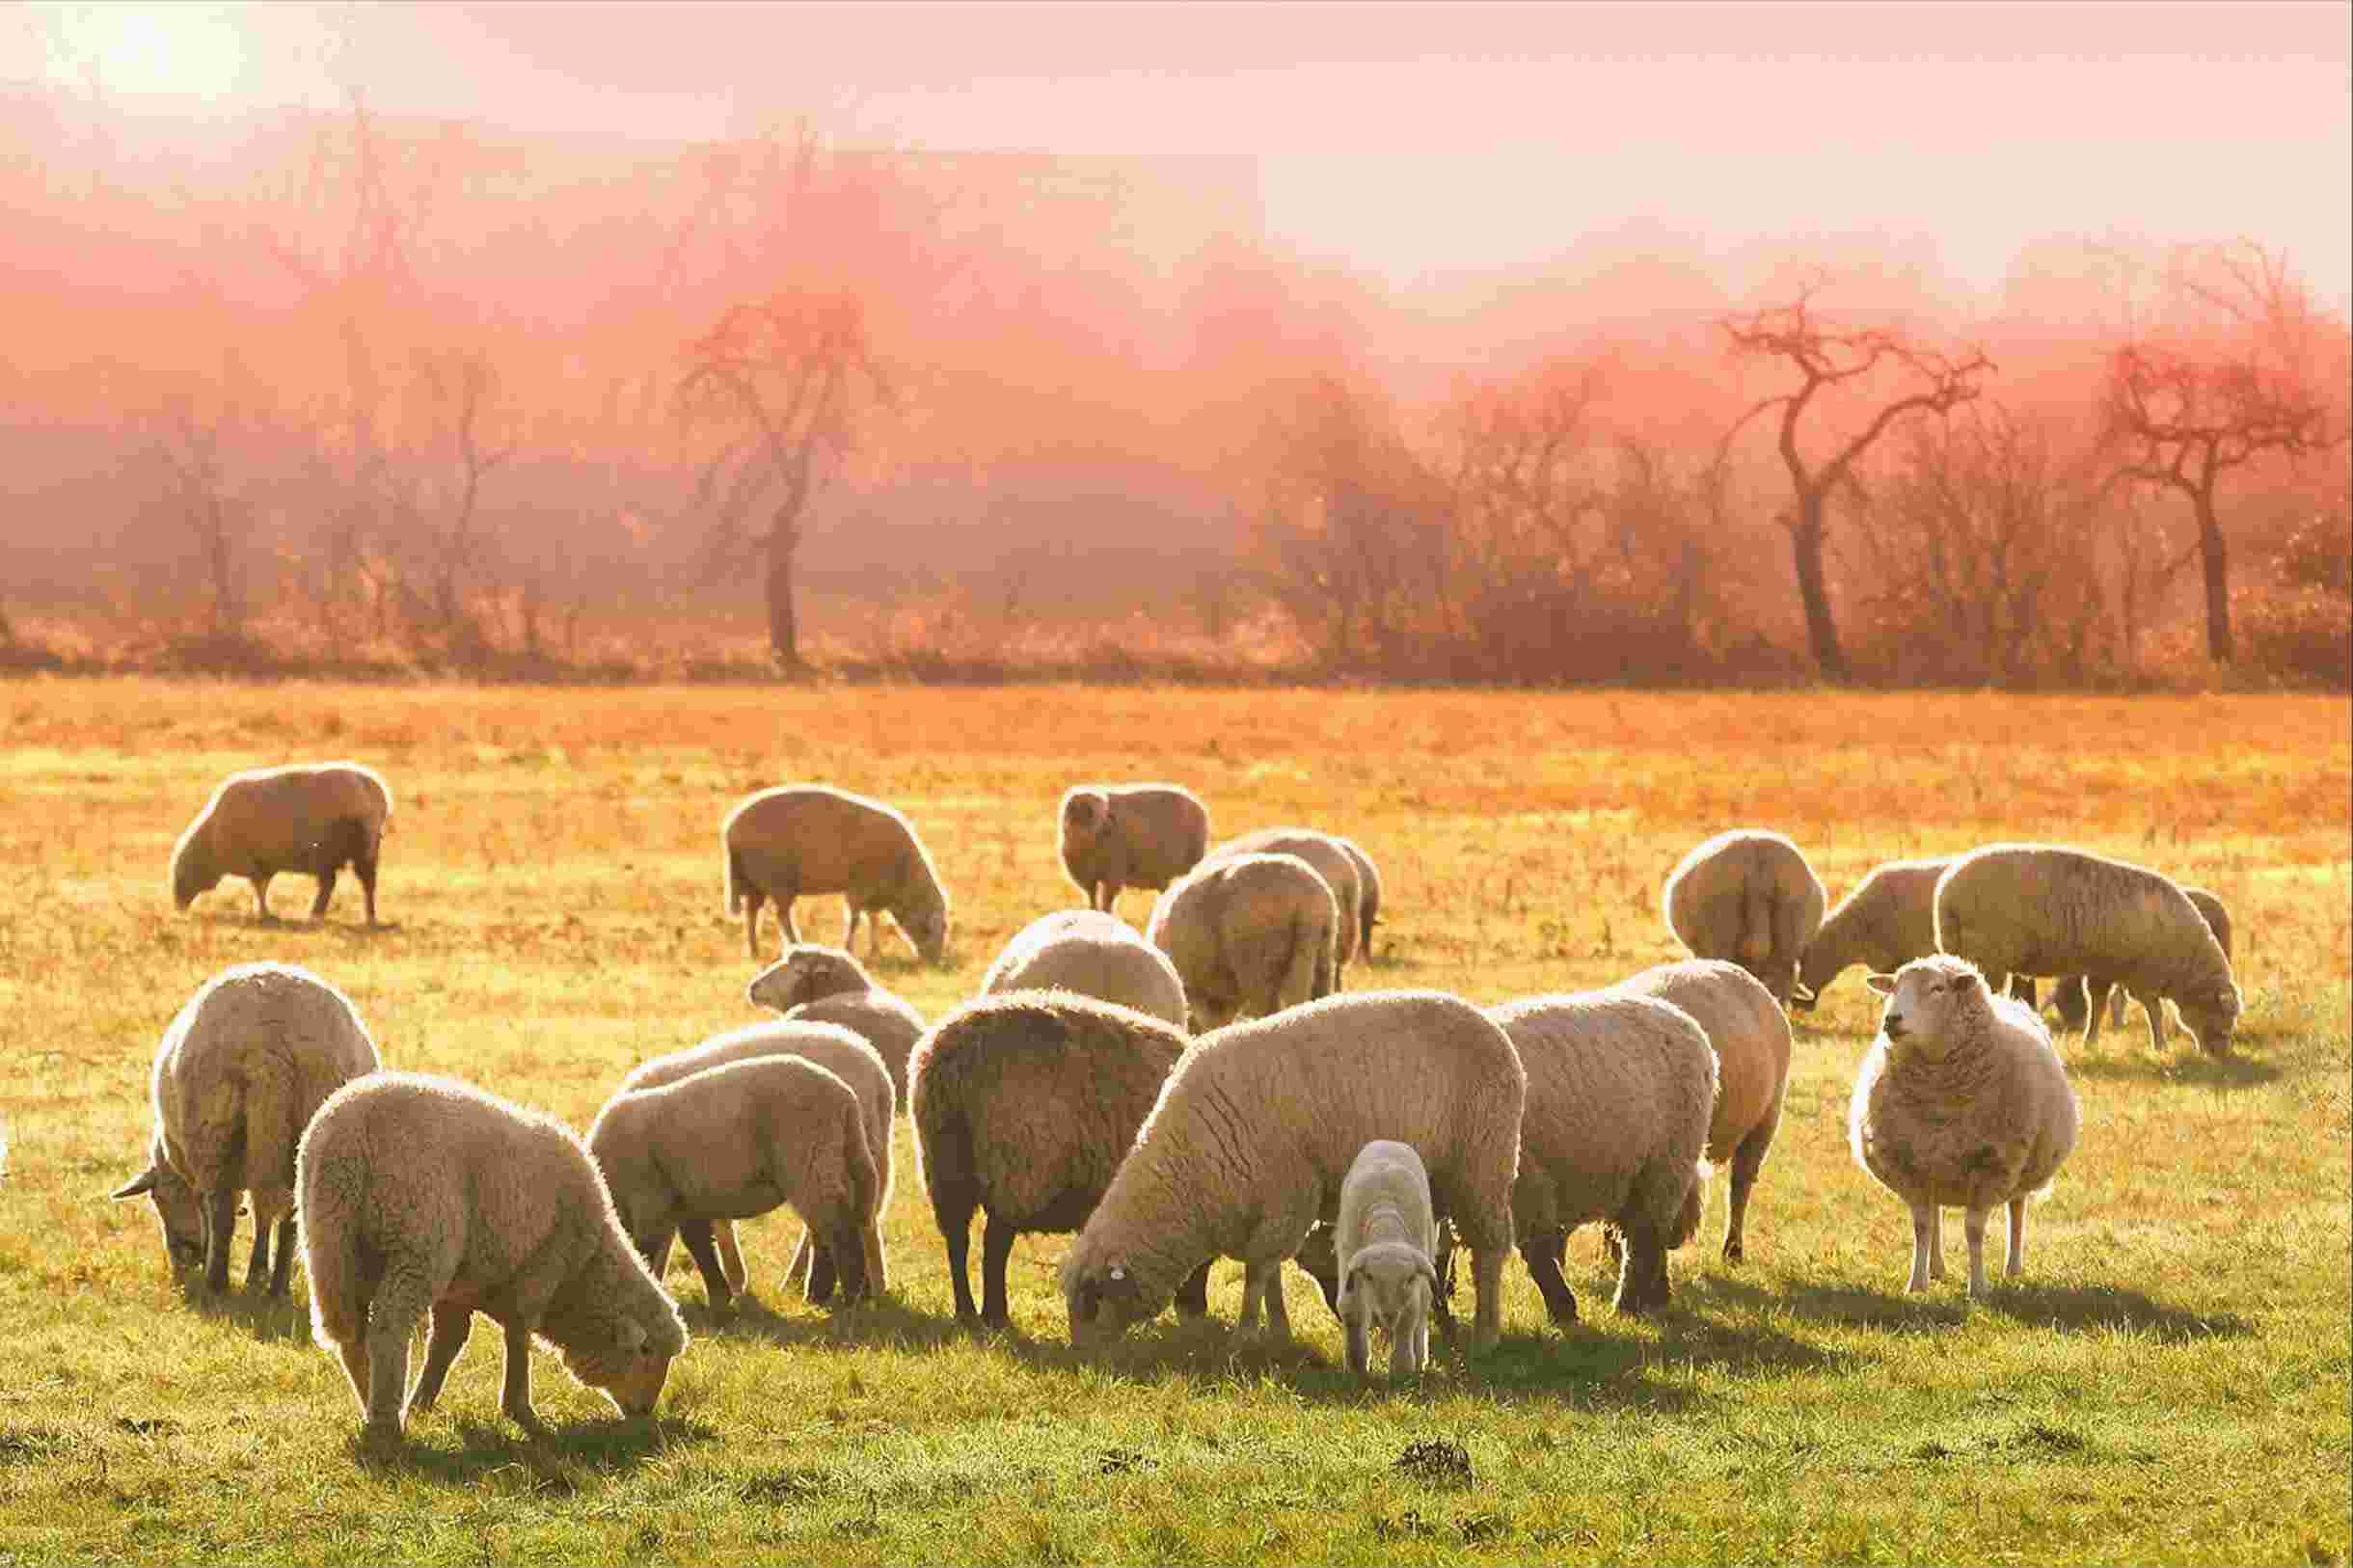 Image: Romney sheep on the farm